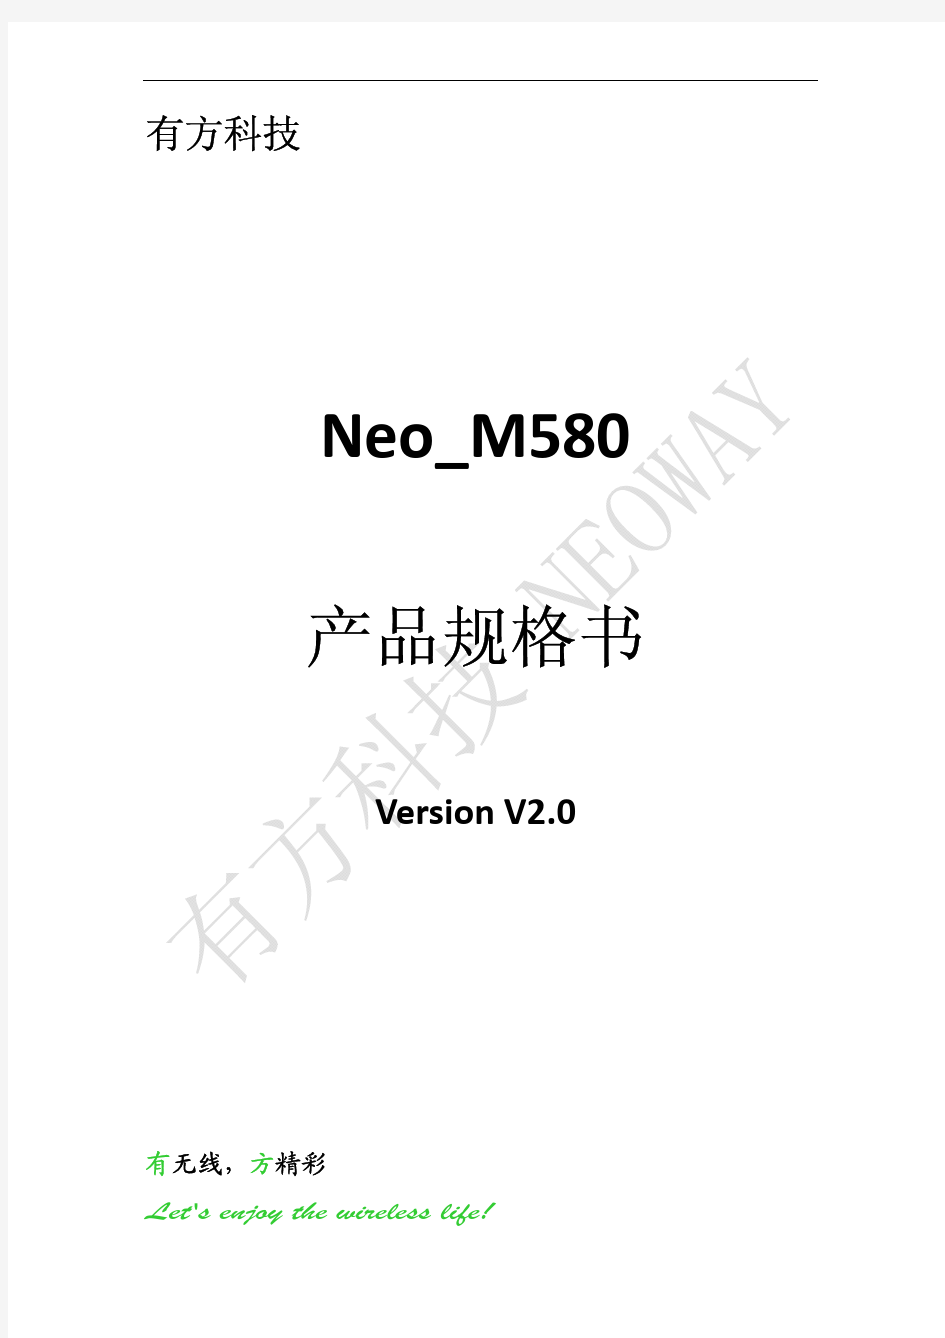 Neo_M580模块产品规格书V2.0